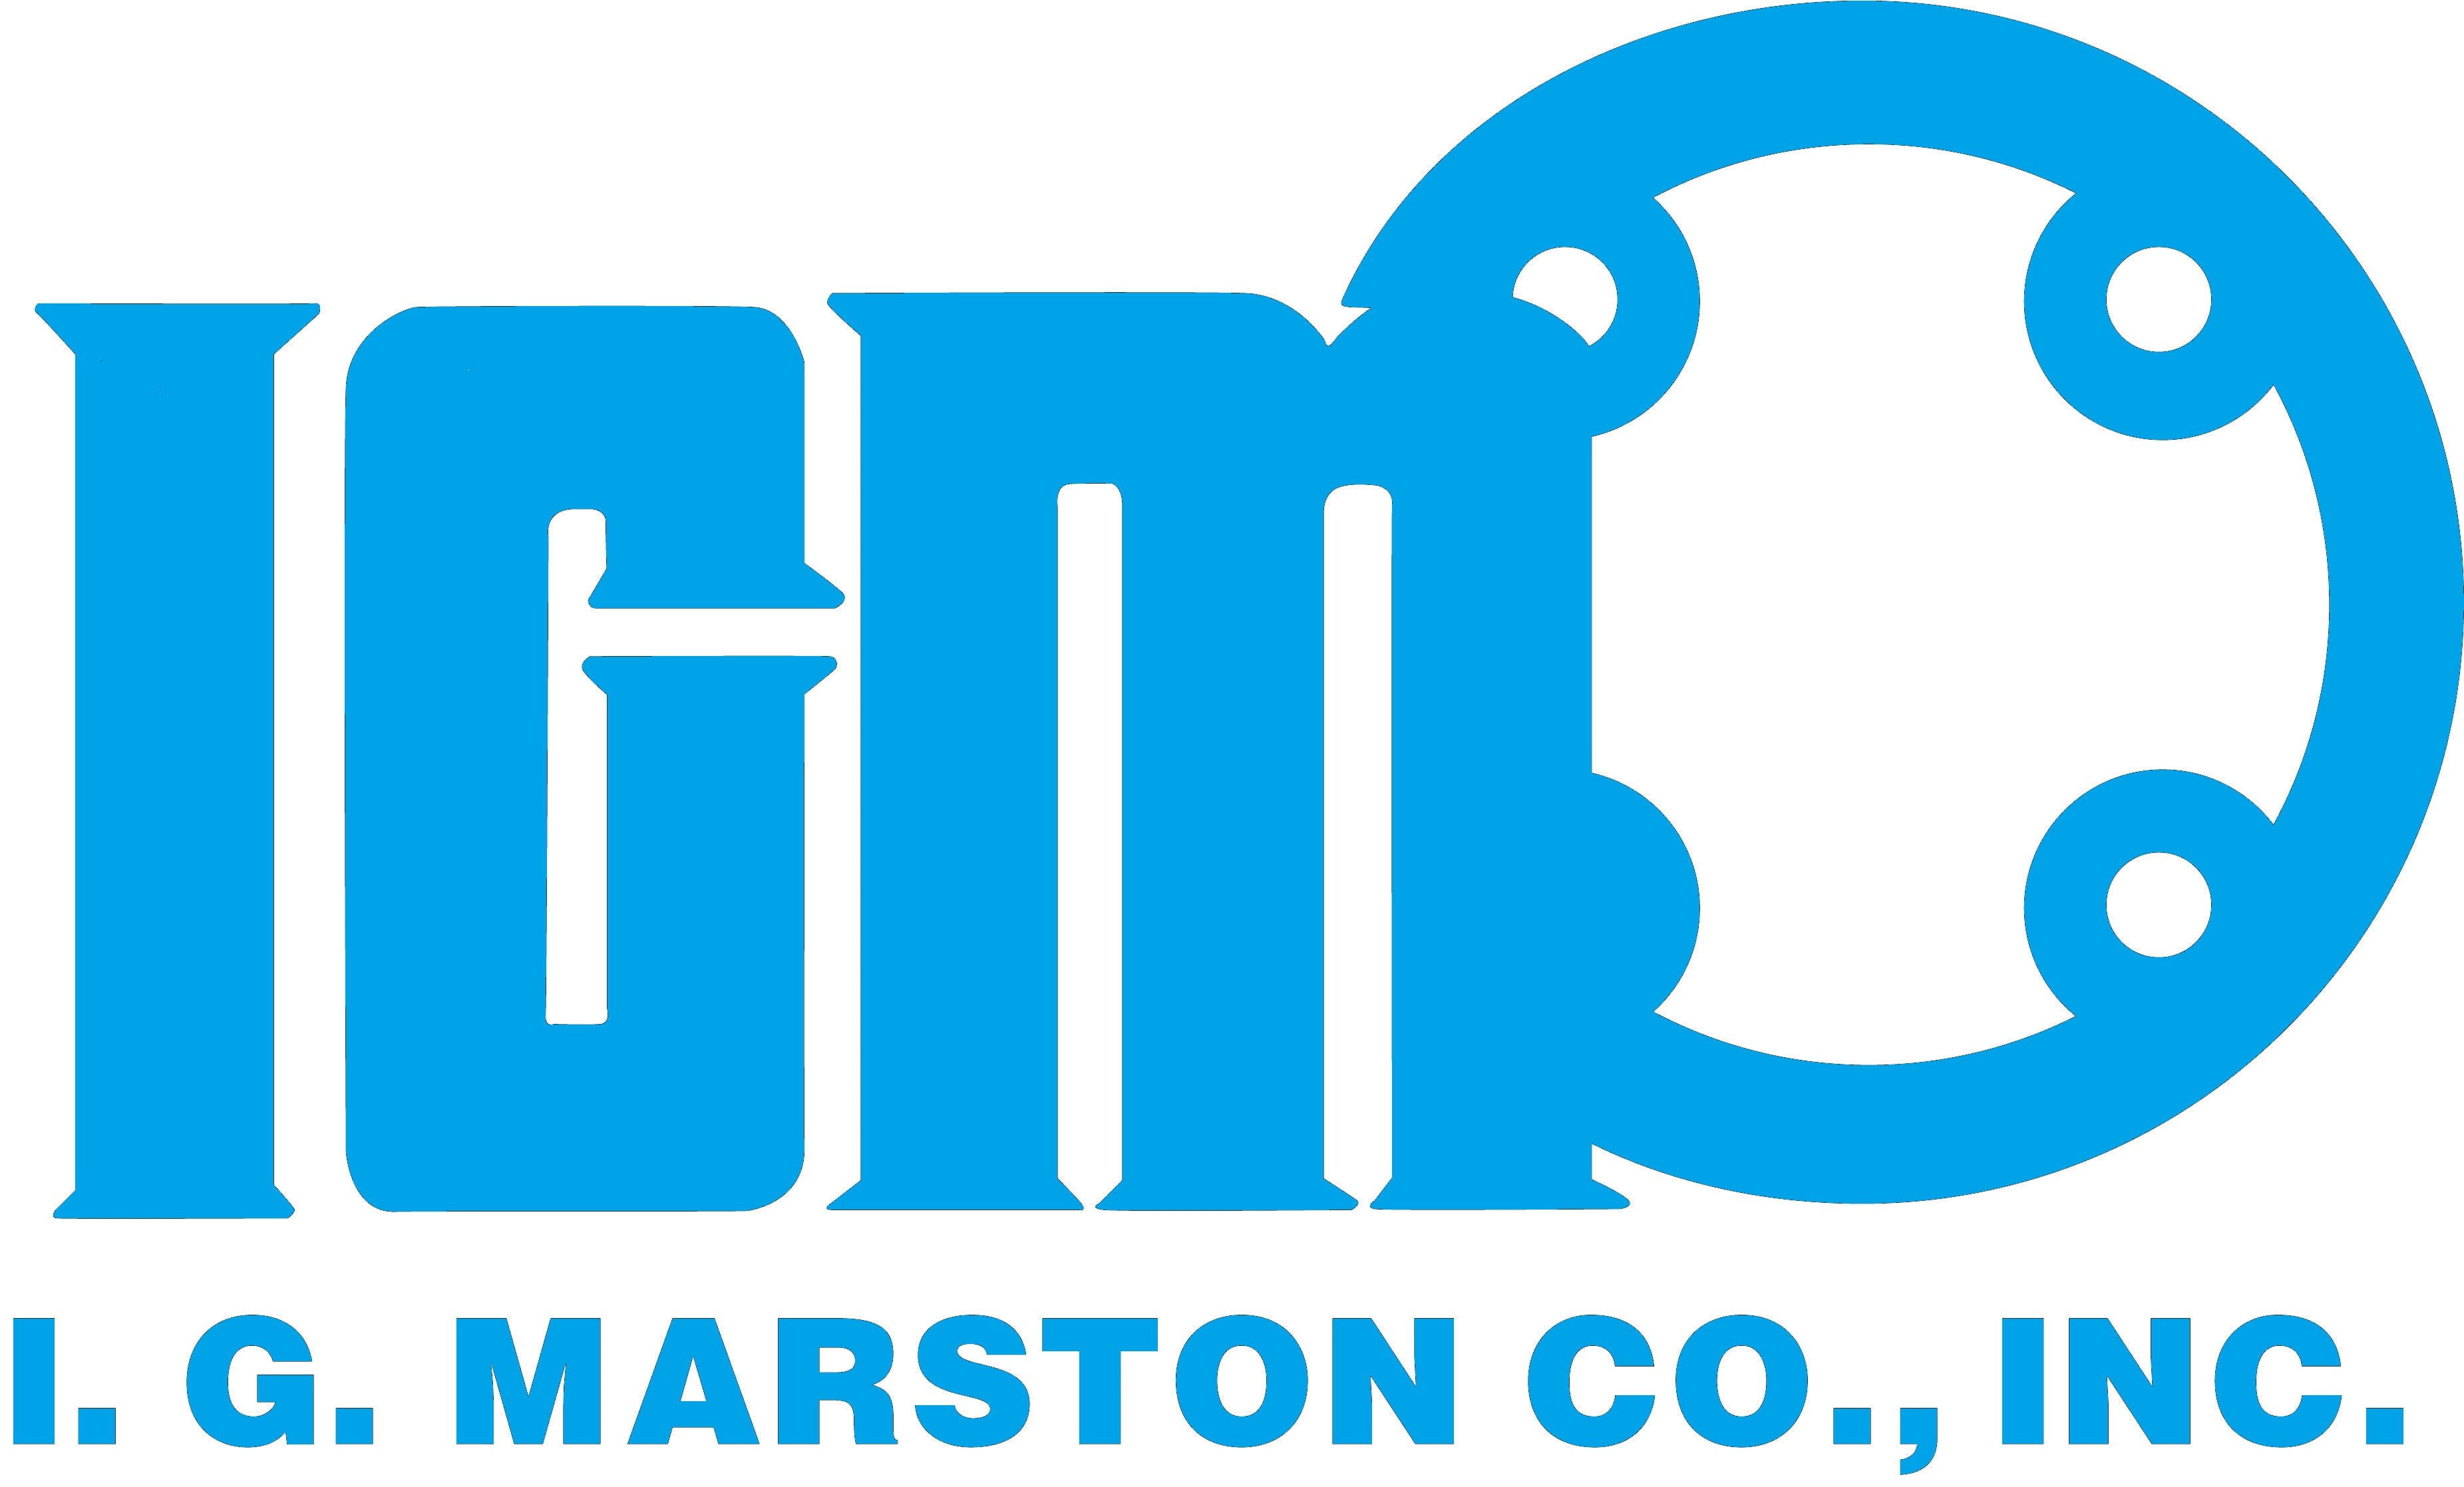 IG Marston logo